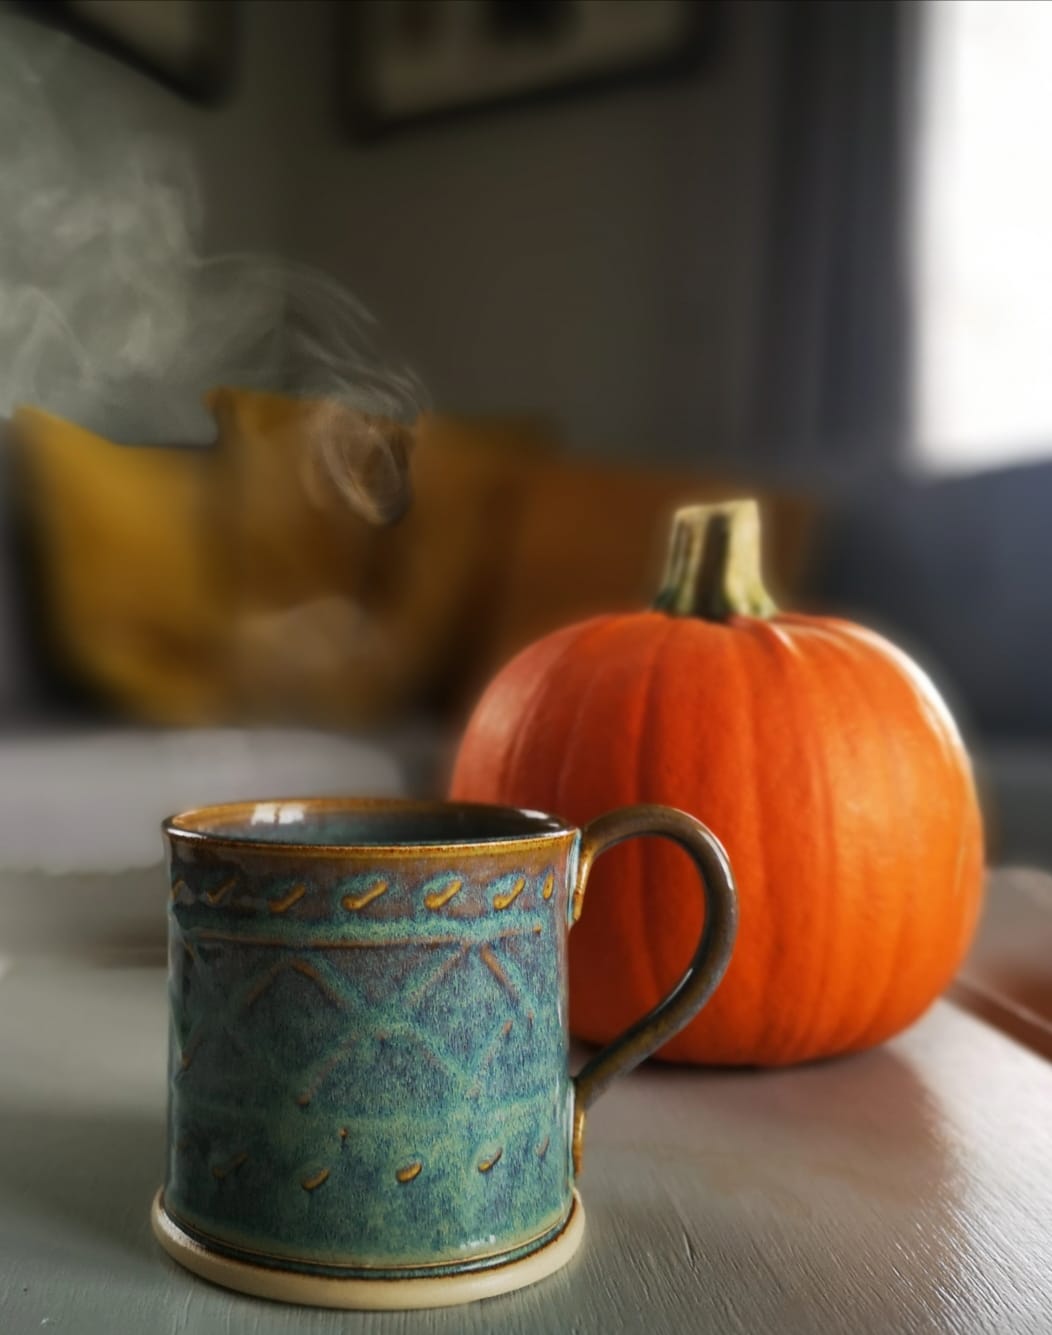 Green Mug with aran knitwear pattern on a table with an orange pumpkin